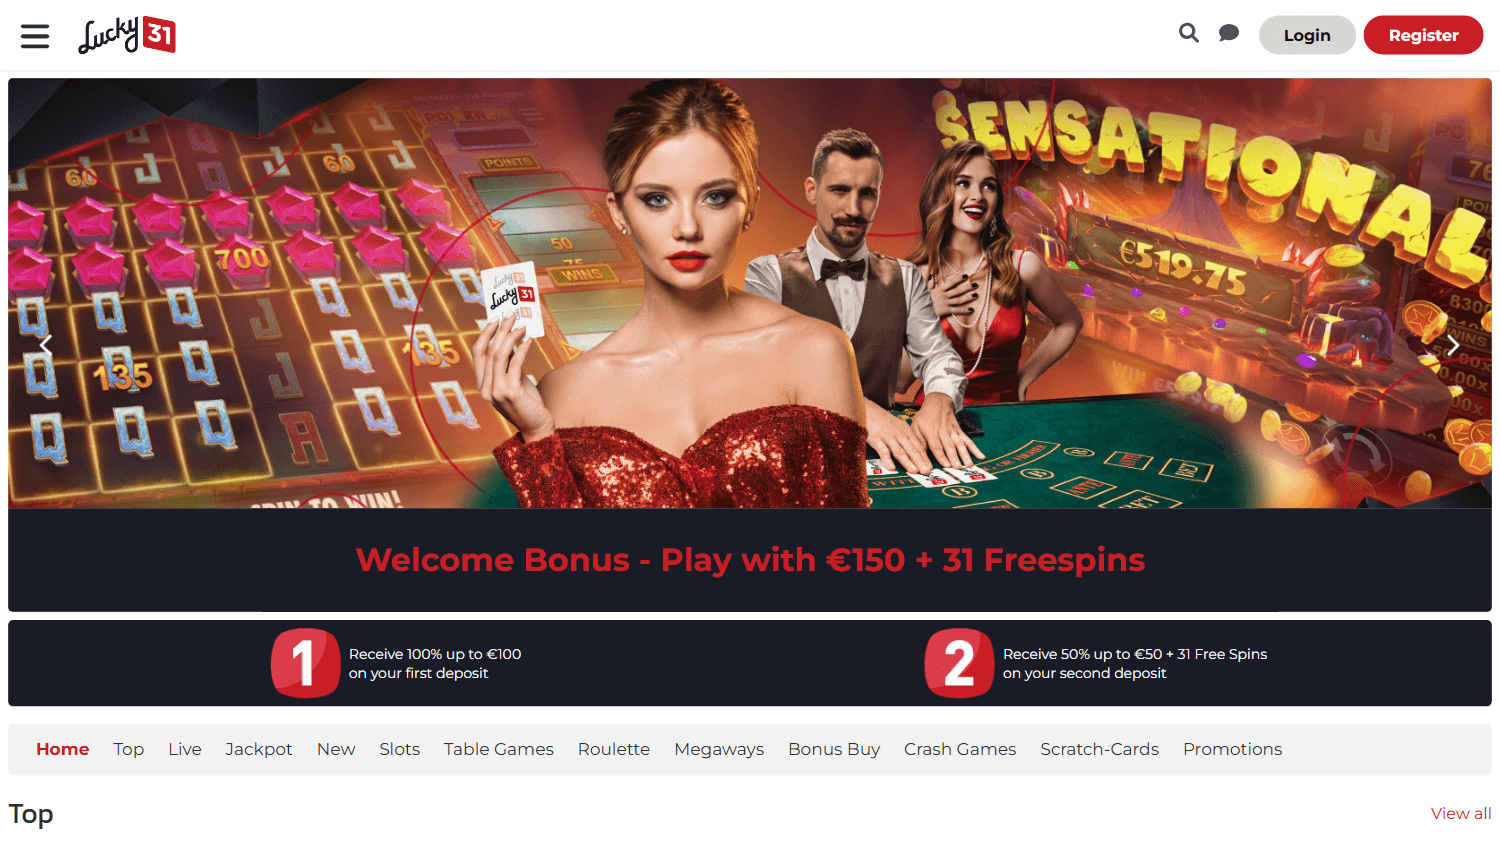 lucky_31_casino_homepage_desktop